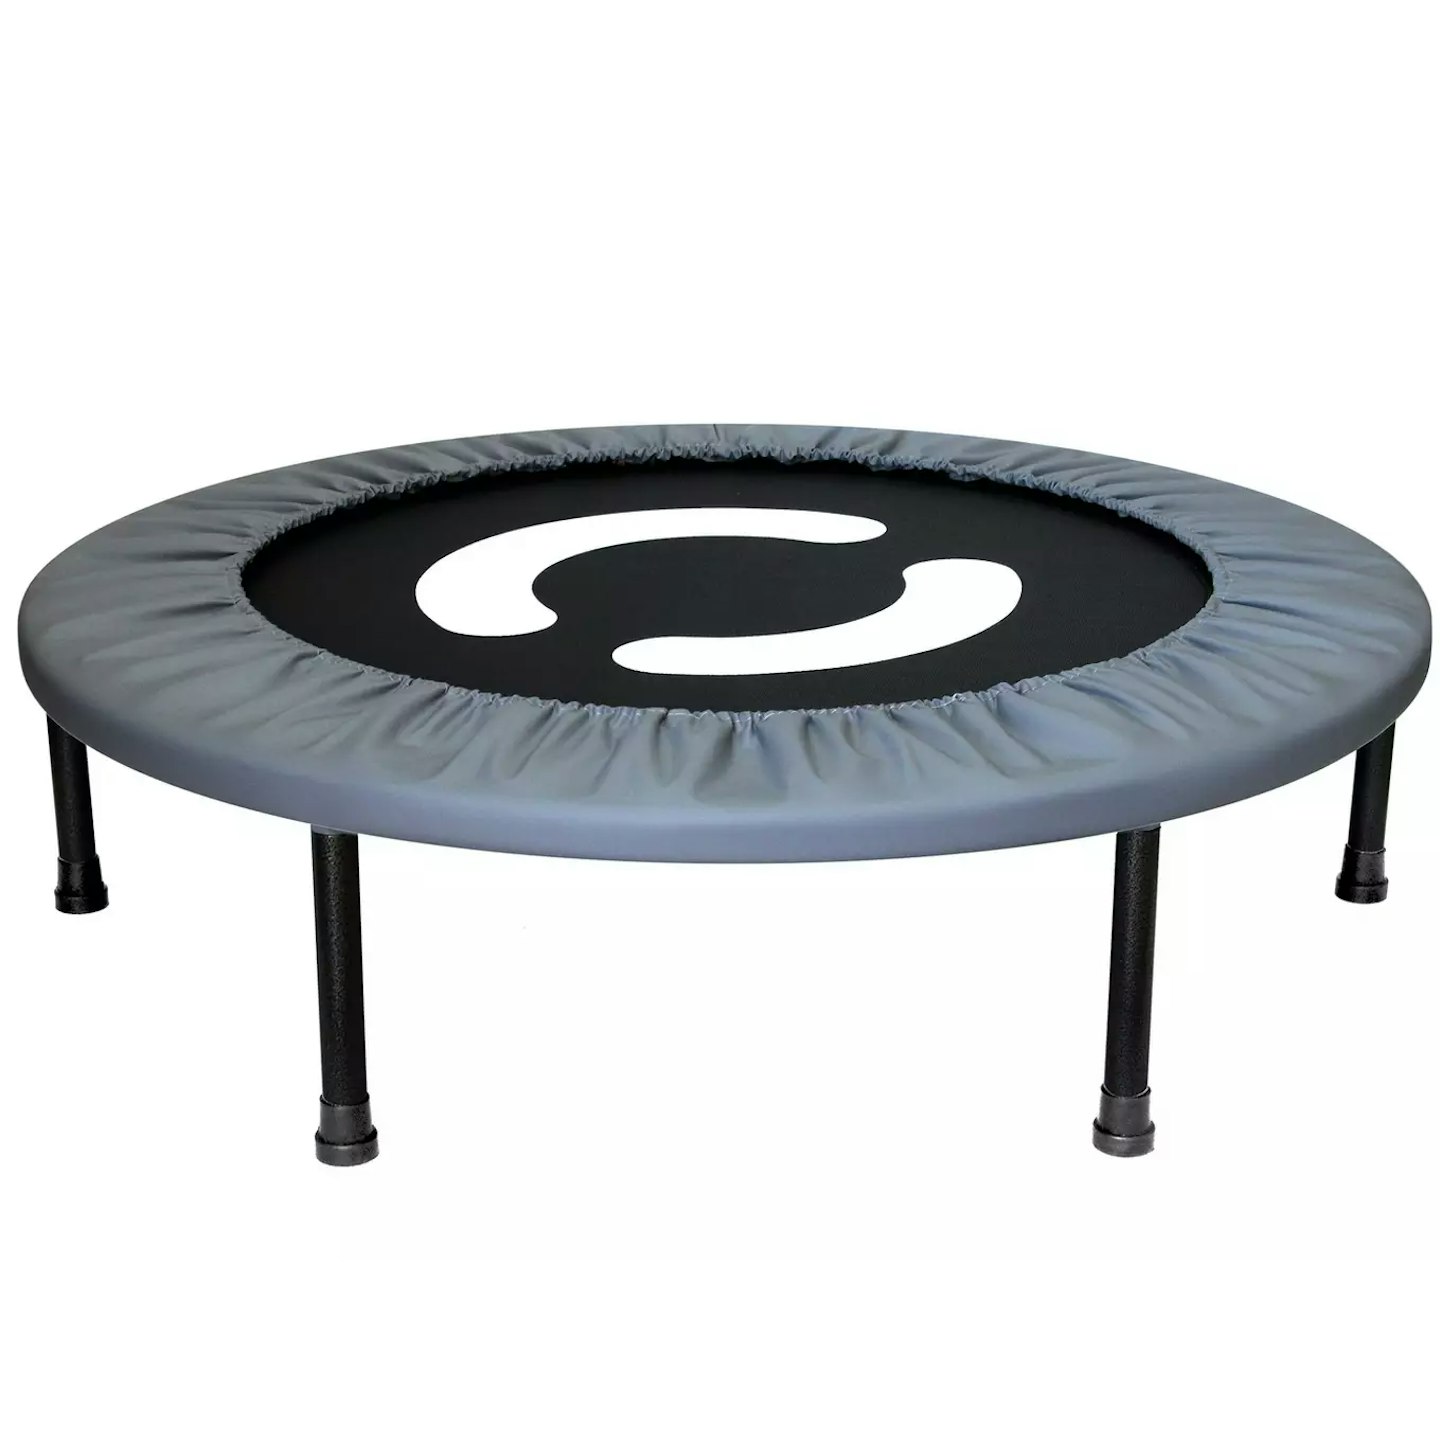 Opti mini fitness trampoline